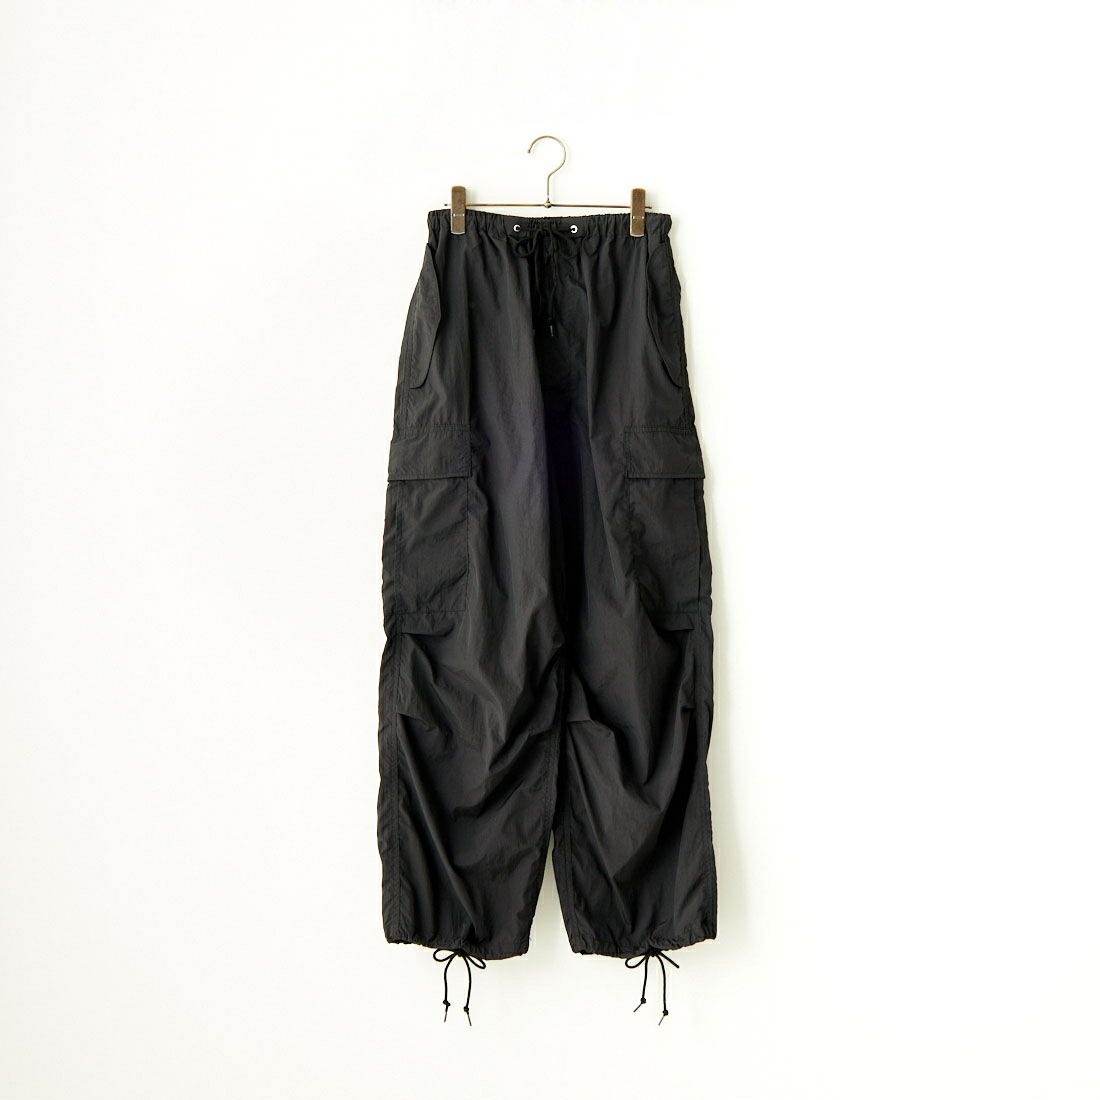 Jeans Factory Clothes [ジーンズファクトリークローズ] ナイロンバルーンカーゴパンツ [IN8-PT-4] BLACK